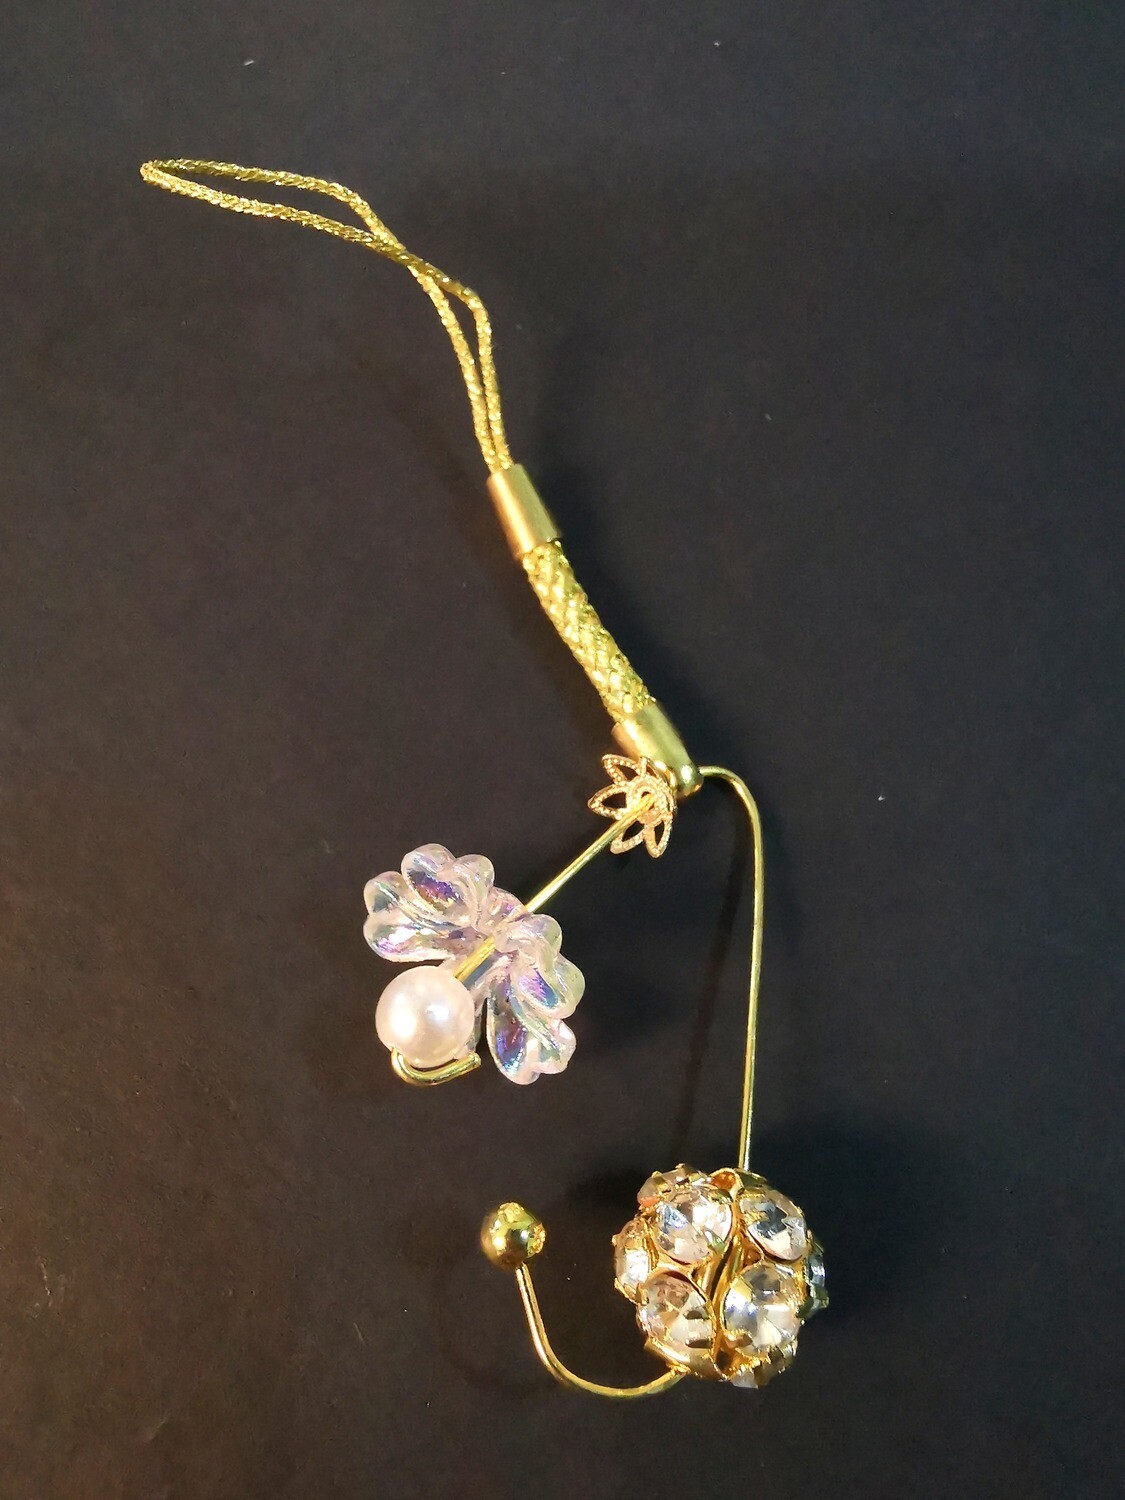 Dual Function Handphone Lanyard & Mask Accessory (Crystal Diamond Gold Flower)